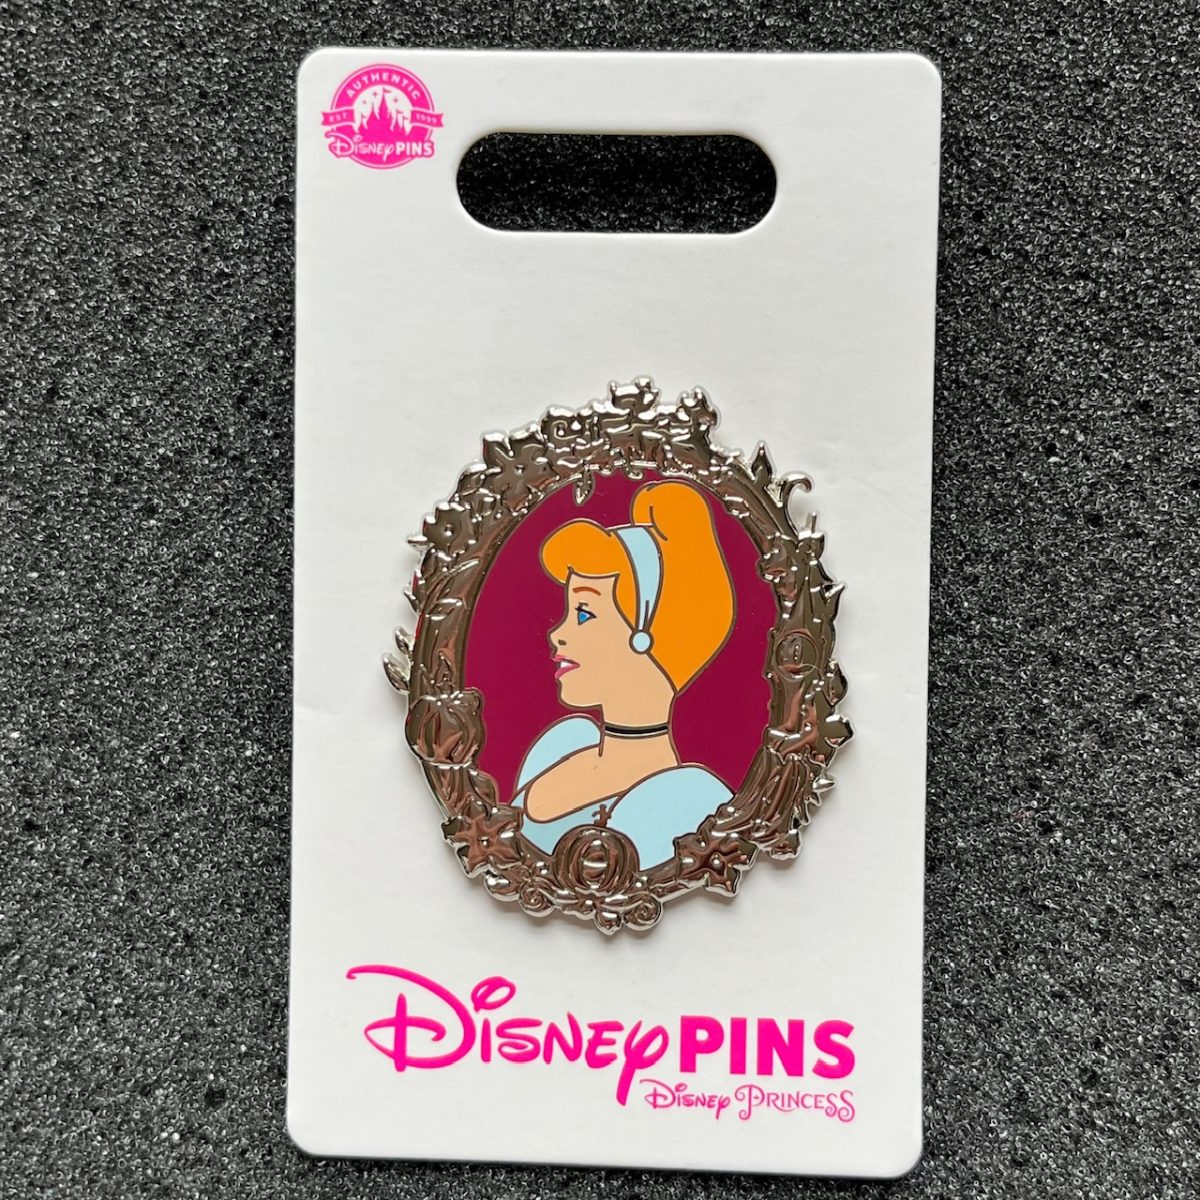 Cinderella Disney Princess Pin - Disney Pins Blog